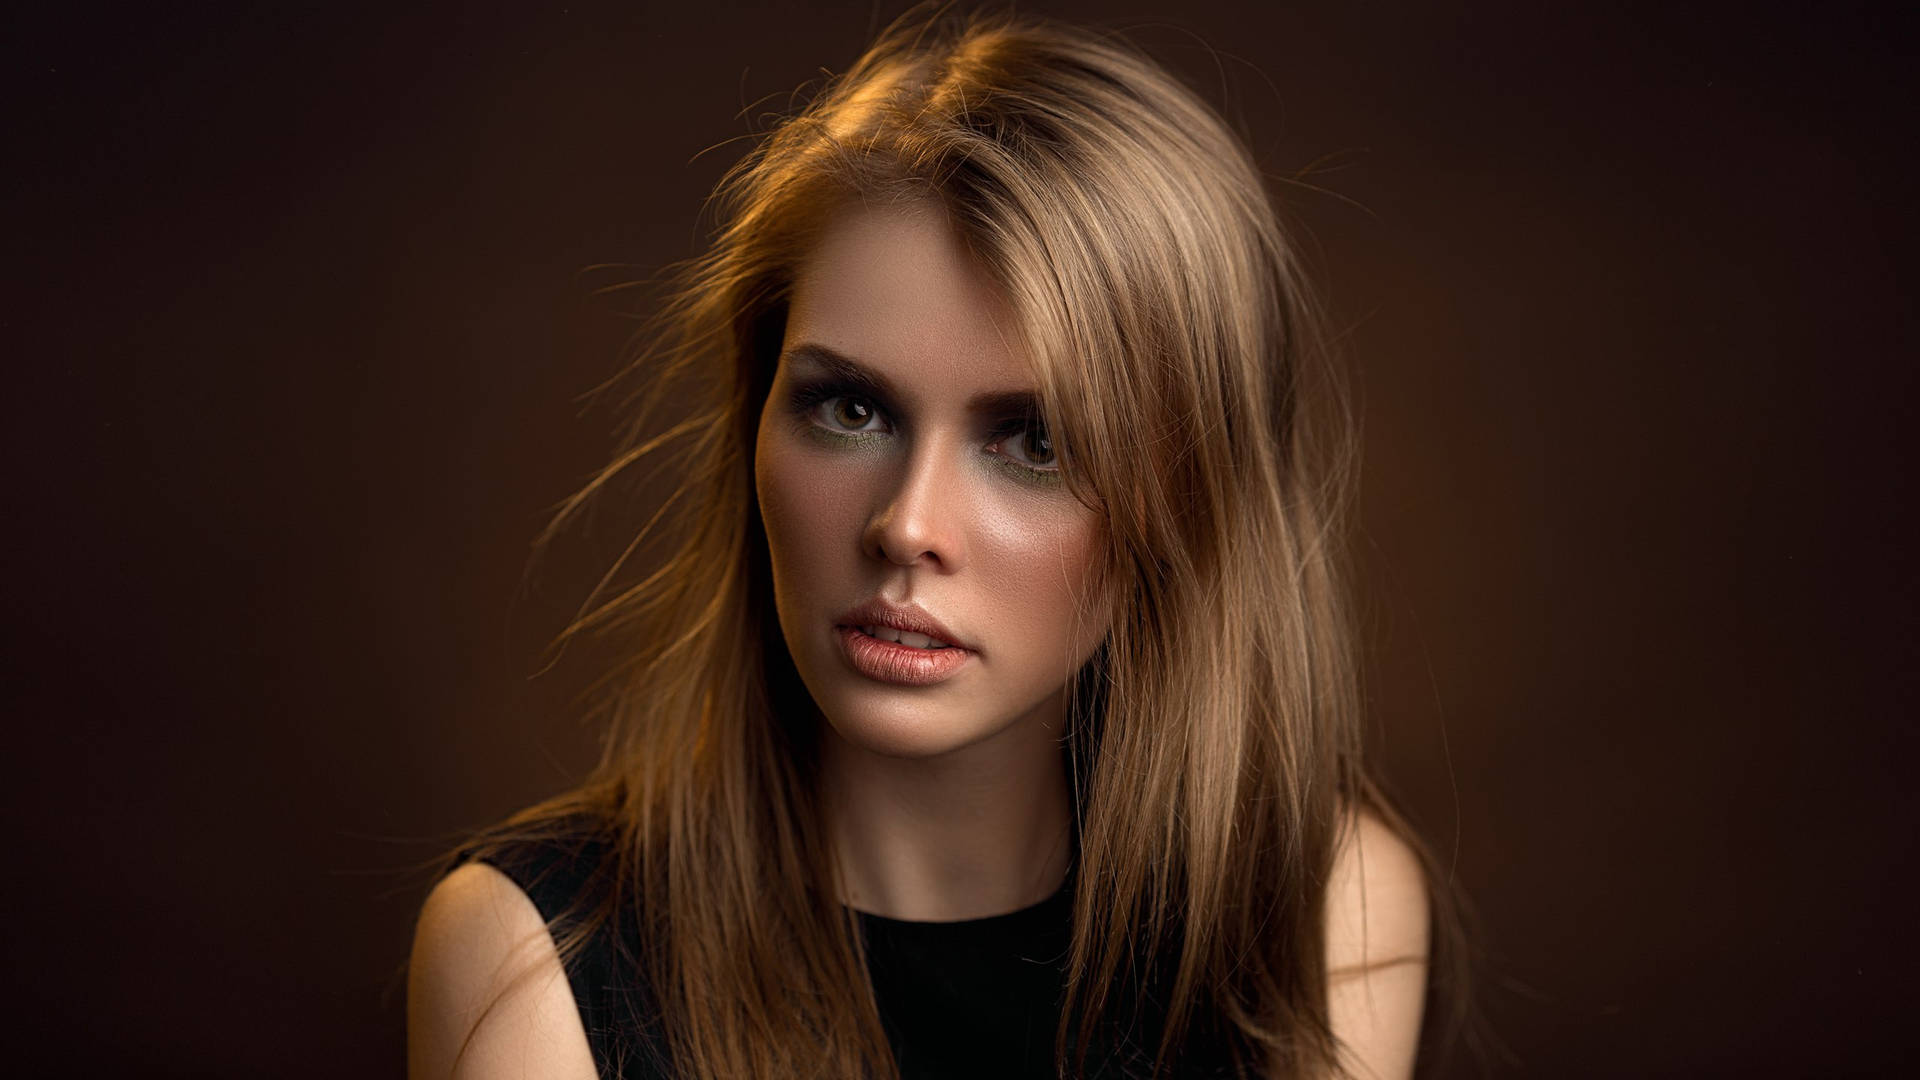 Xenia Kokoreva Make-up Look For Women Background